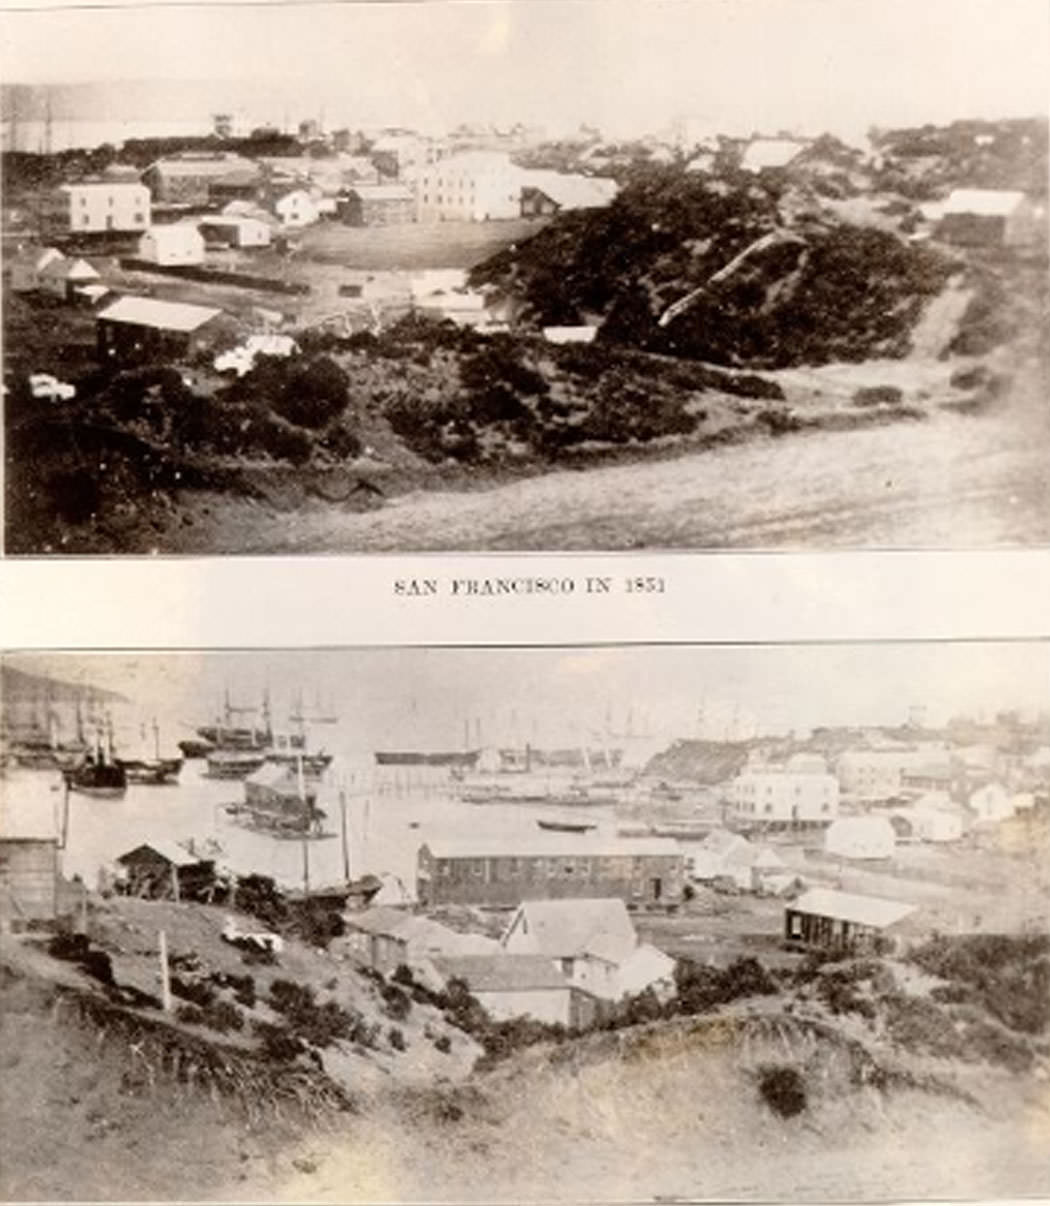 San Francisco in 1851; Yerba Buena Cove in 1851